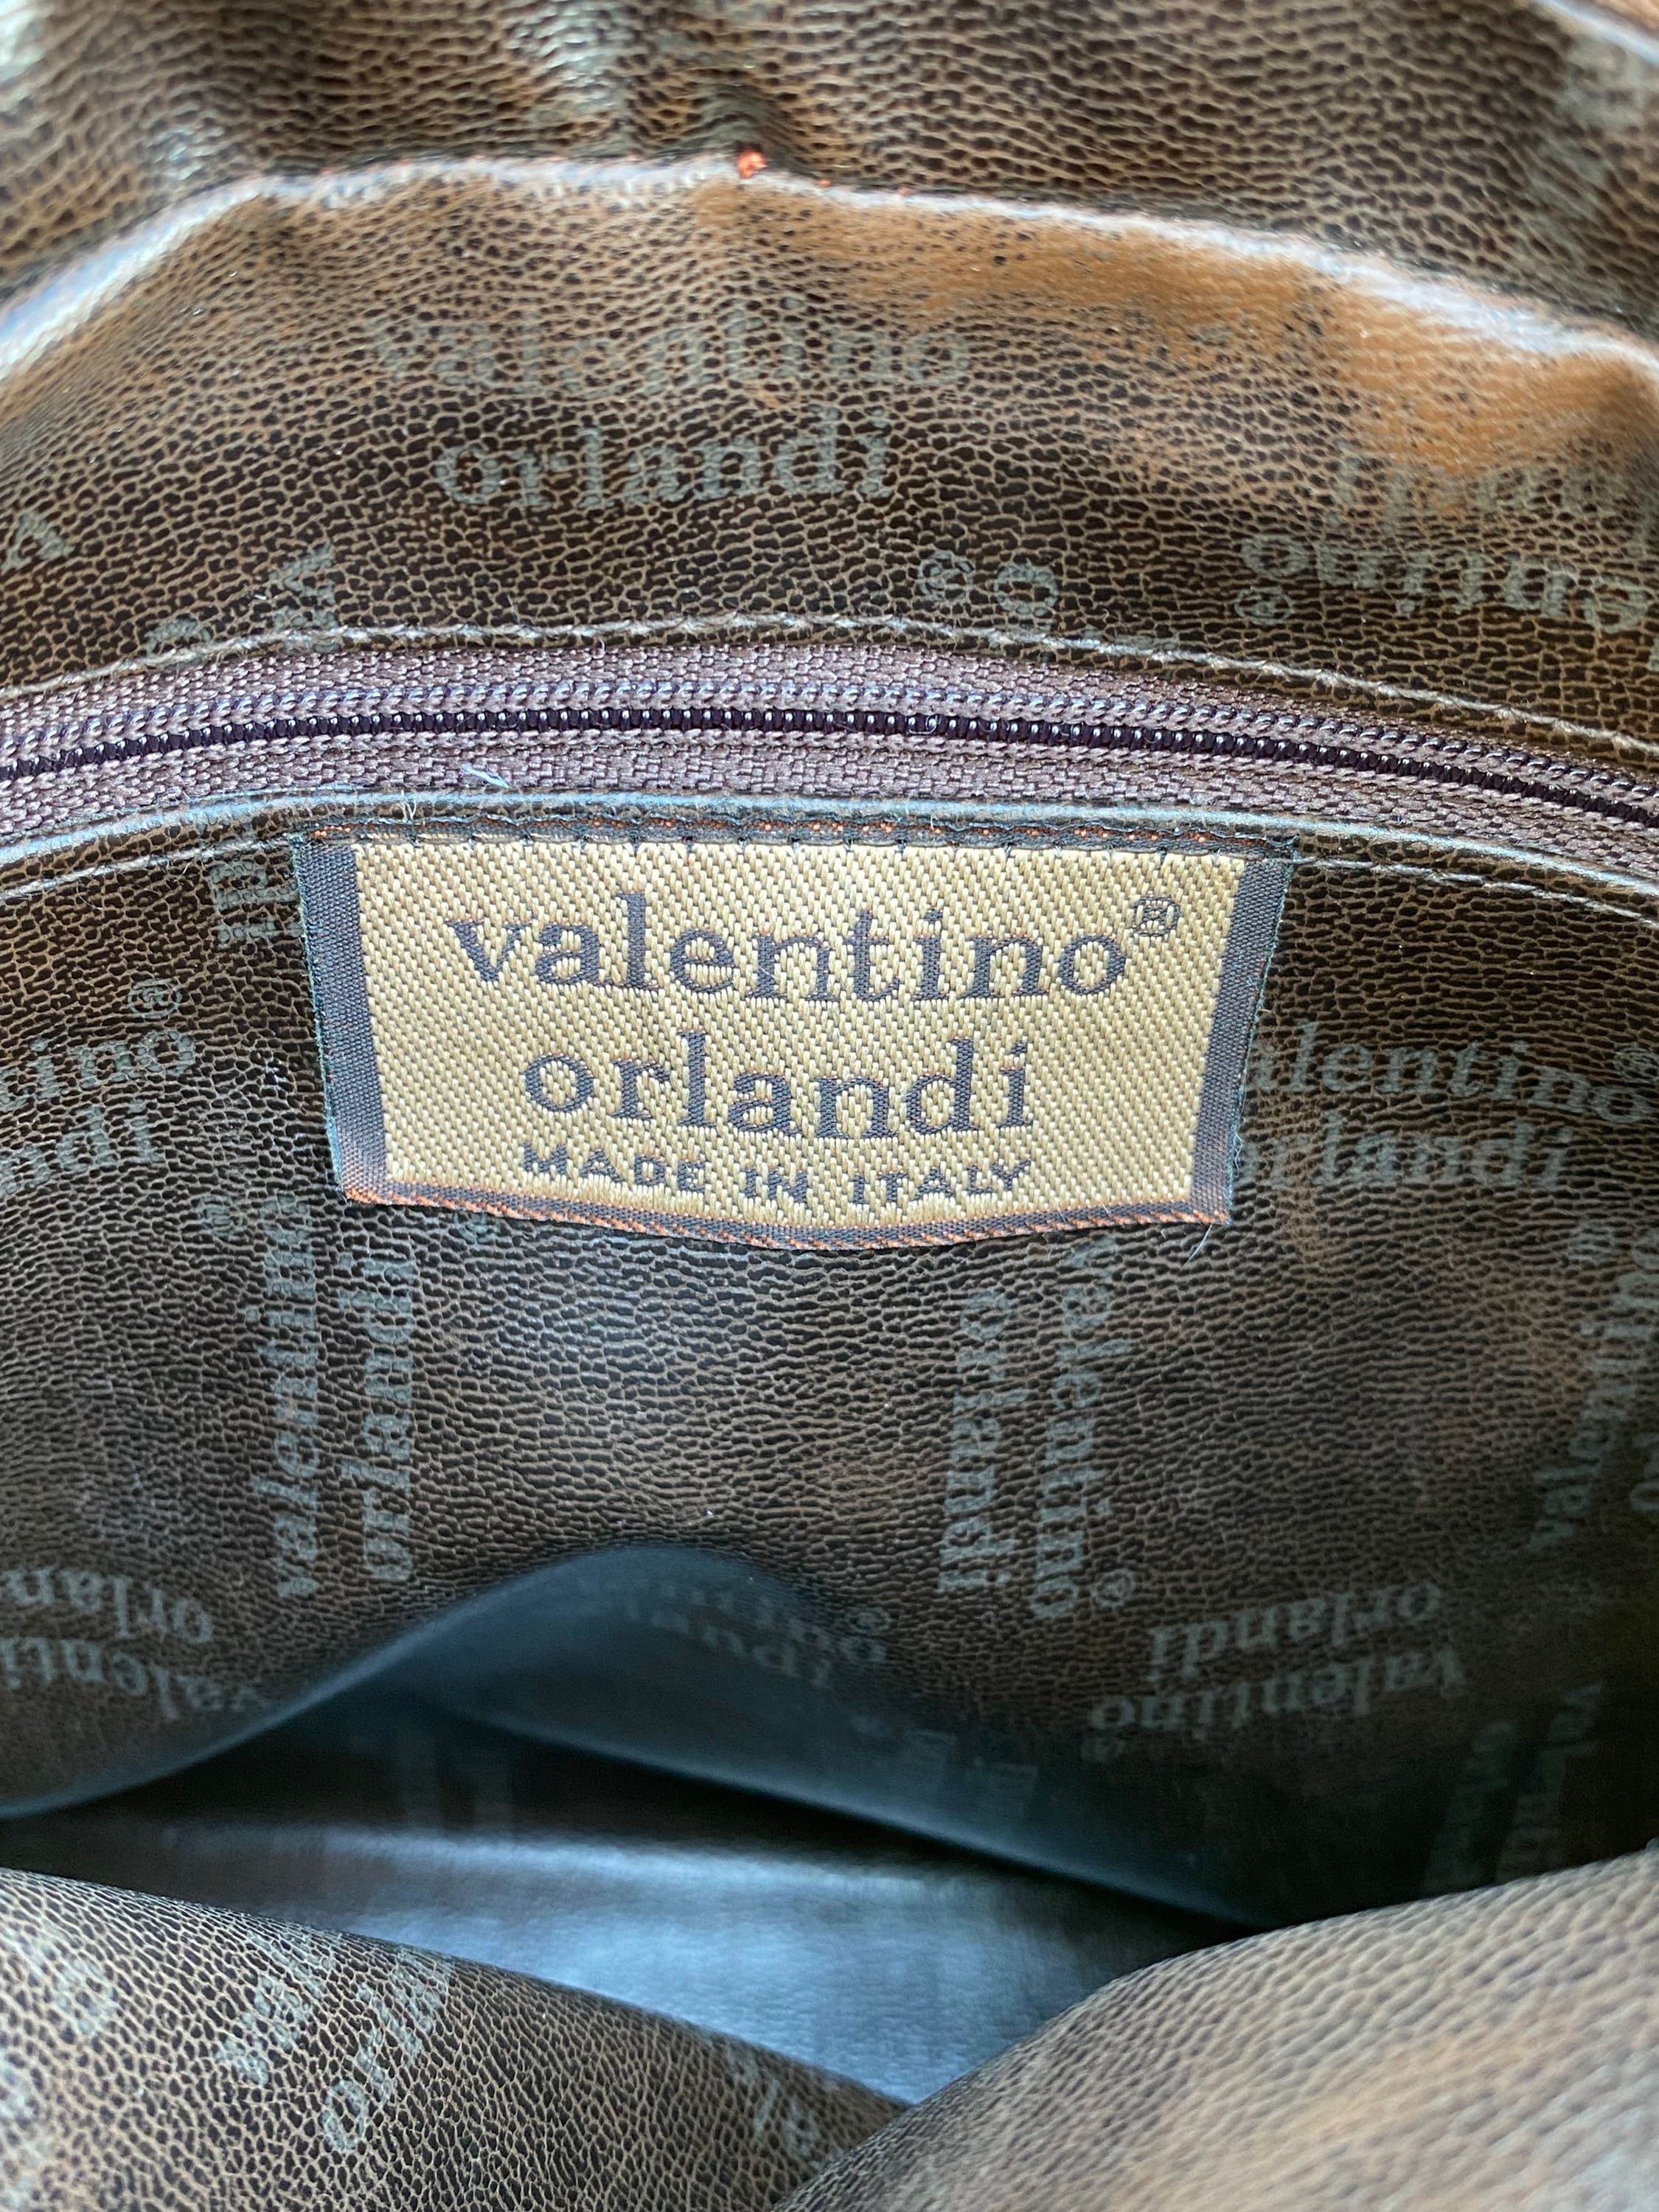 Compare prices for VALENTINO ORLANDI across all European  stores